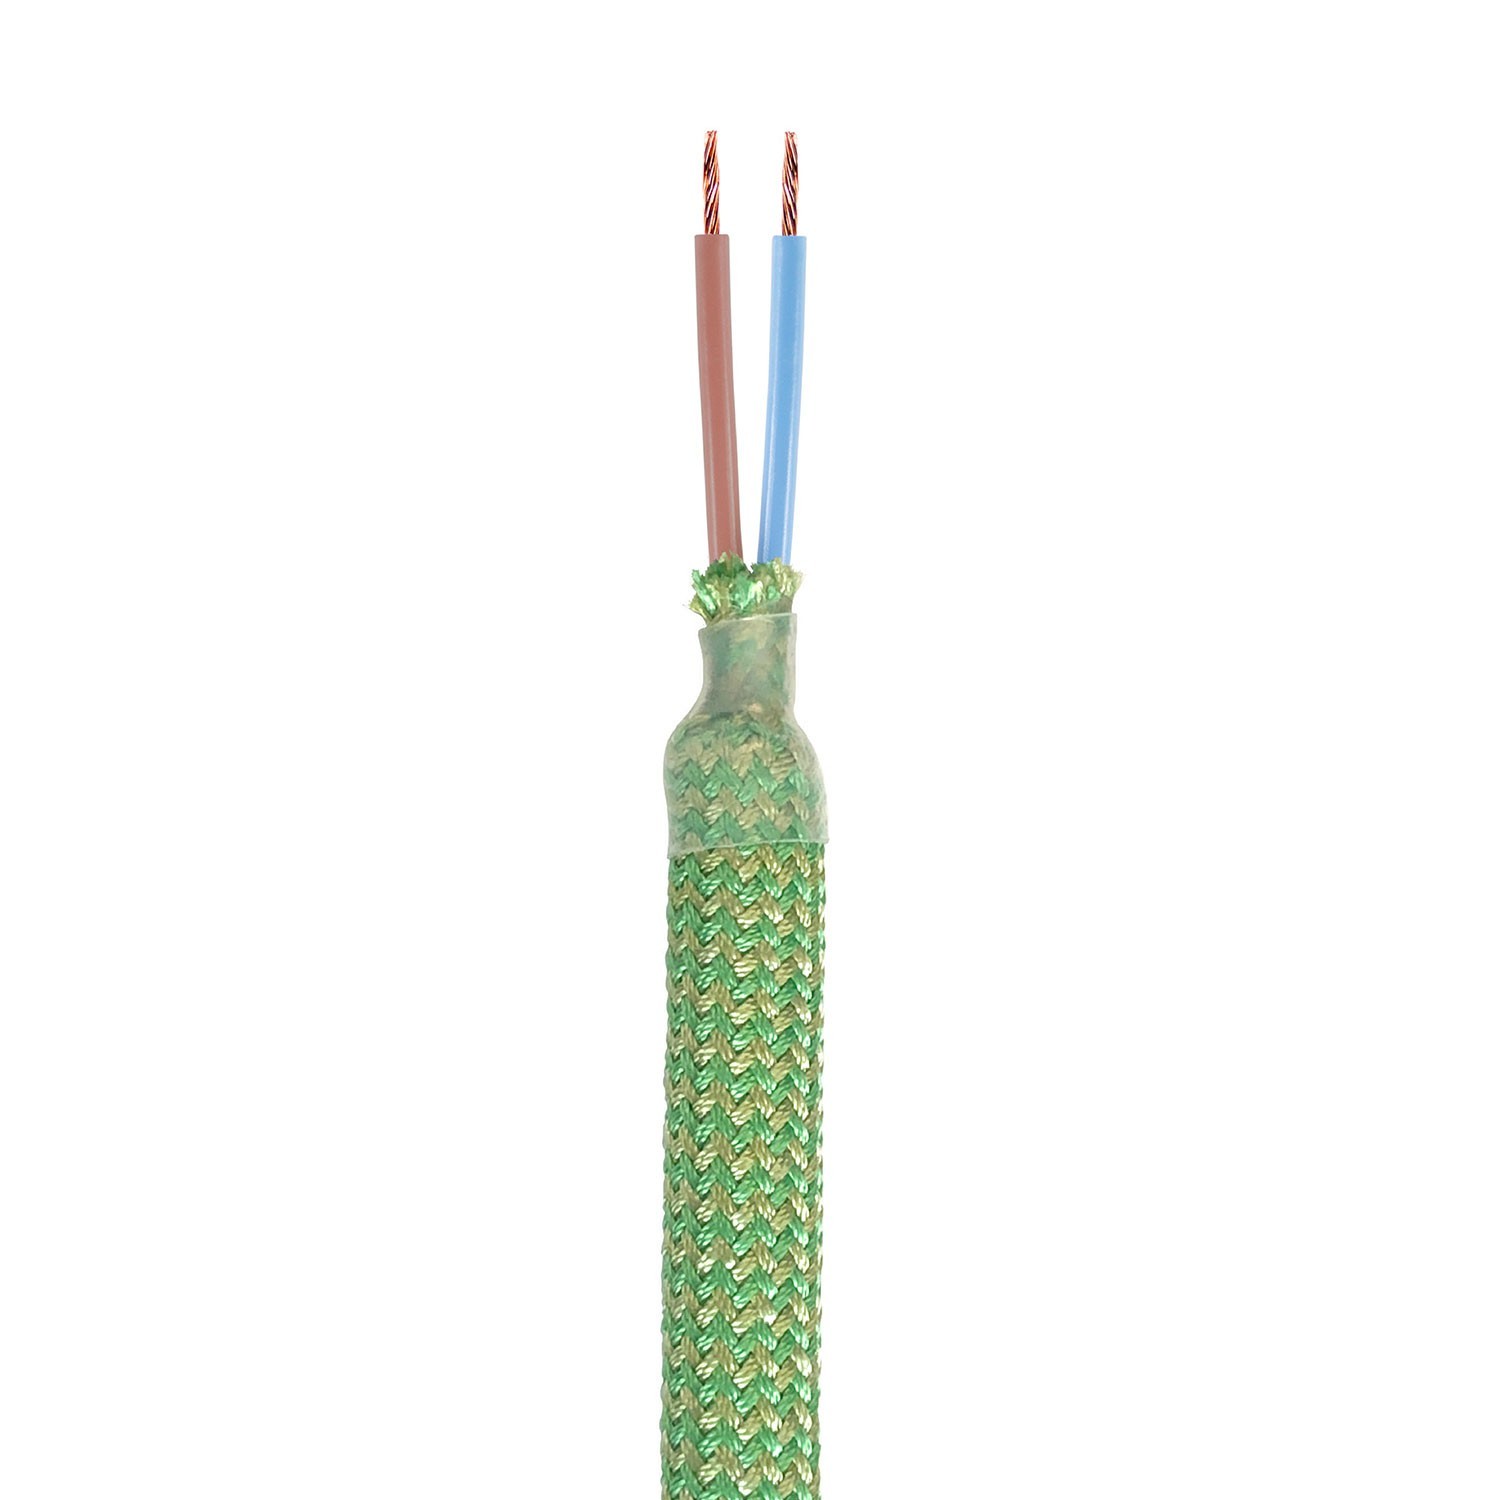 Creative Flex flexible tube in grass green RM77 textile lining